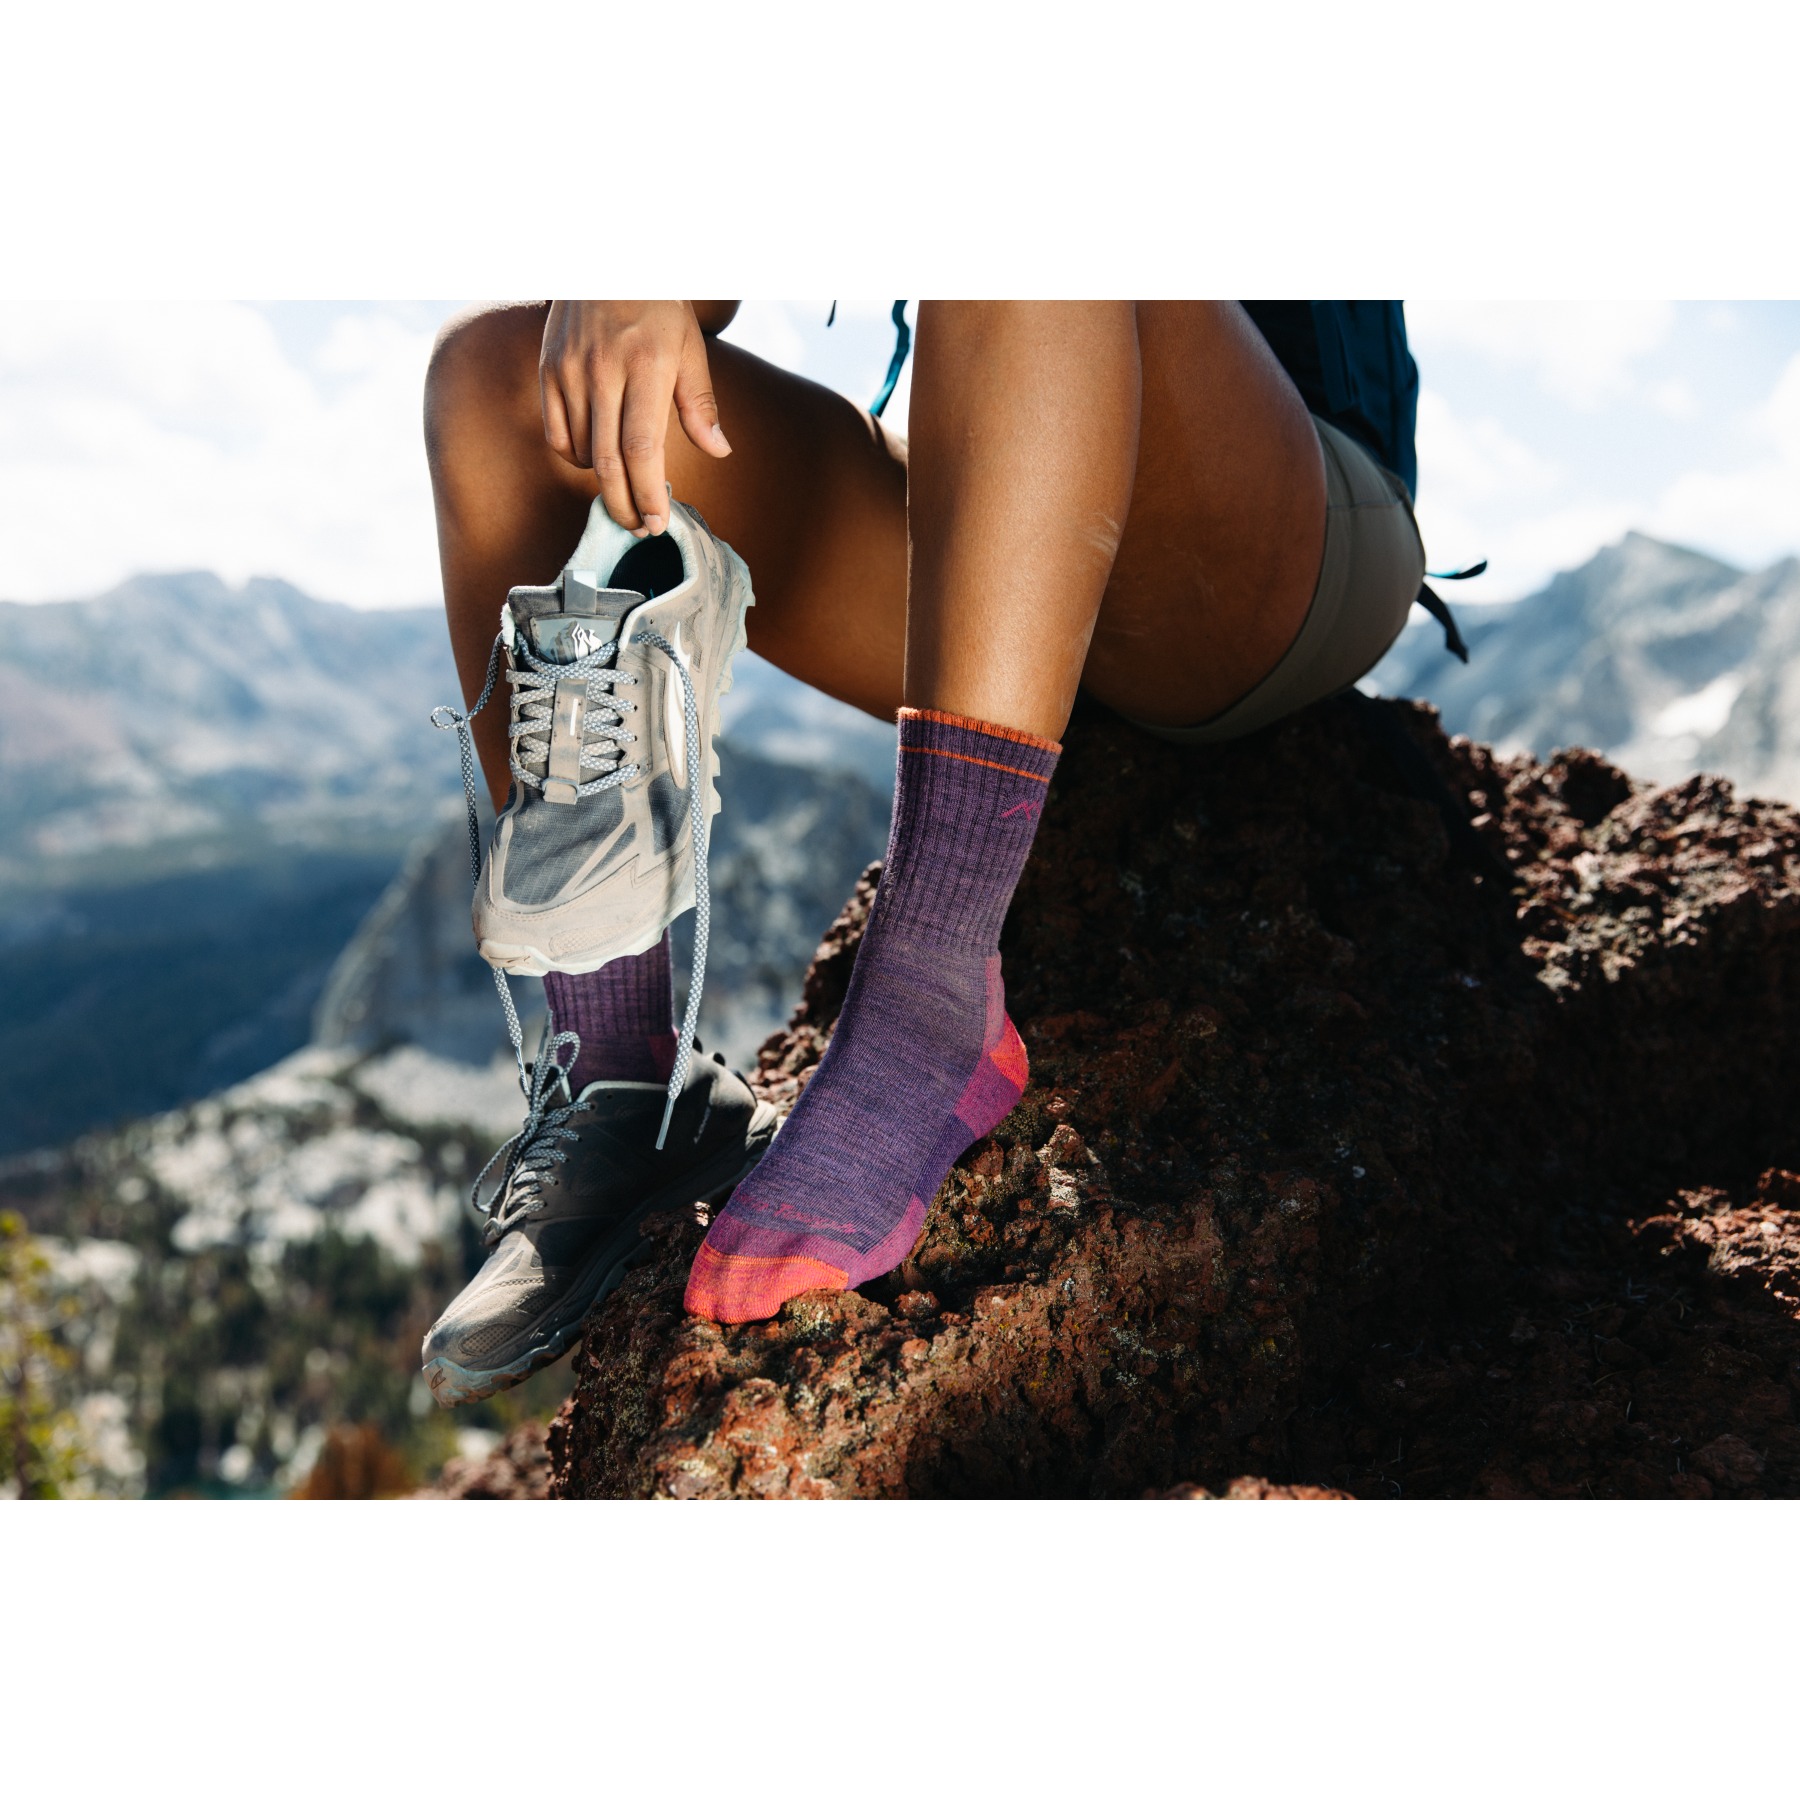 Darn Tough Hiker Quarter Cushion Socks - Women's